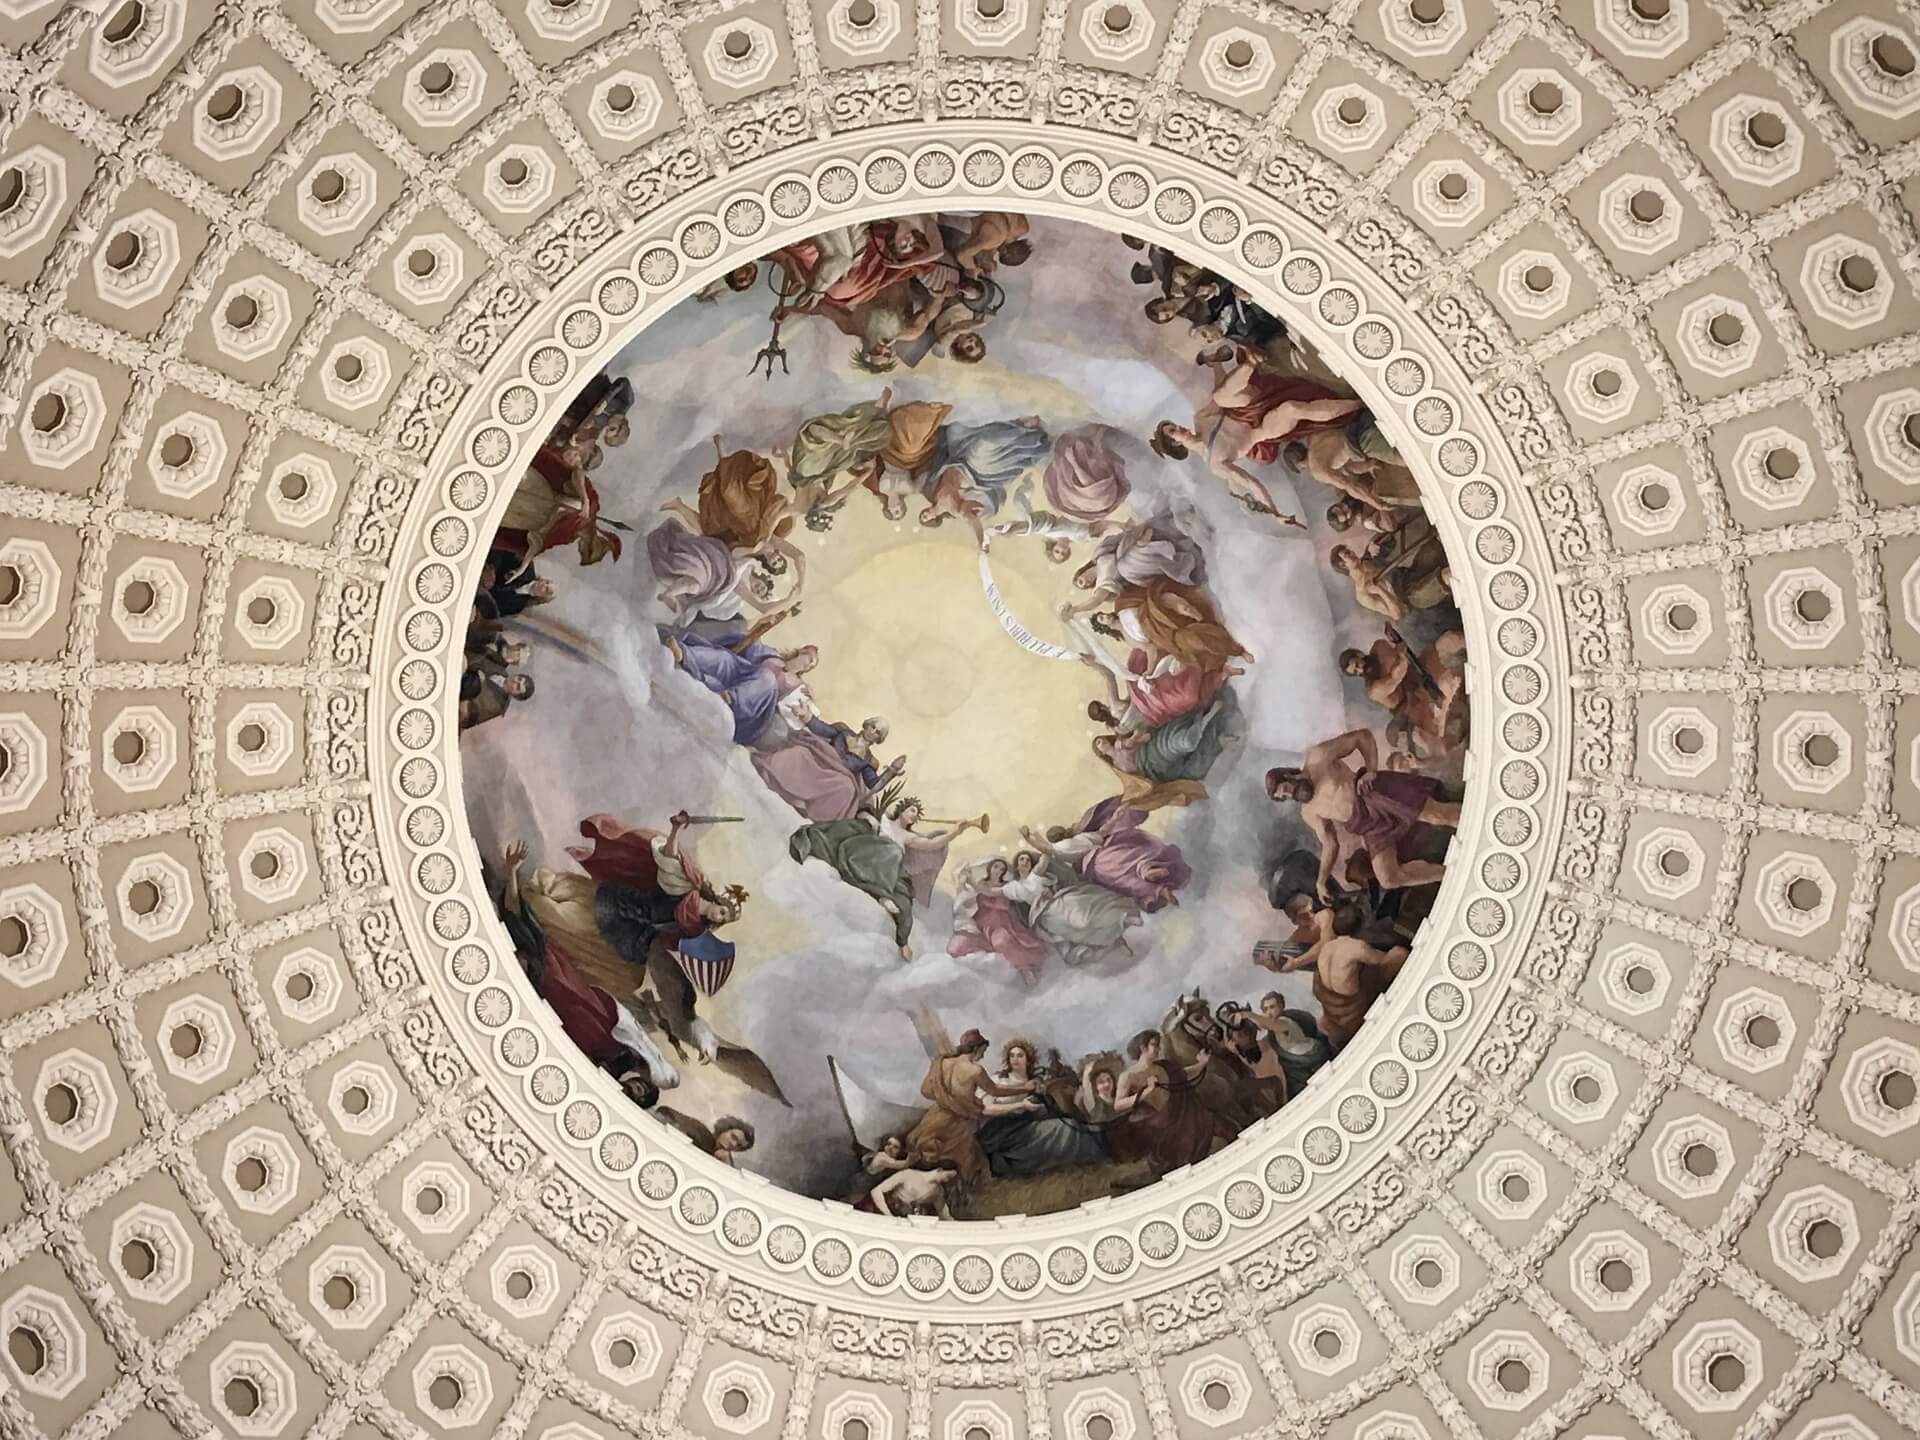 United States Capitol Building rotunda ceiling painting